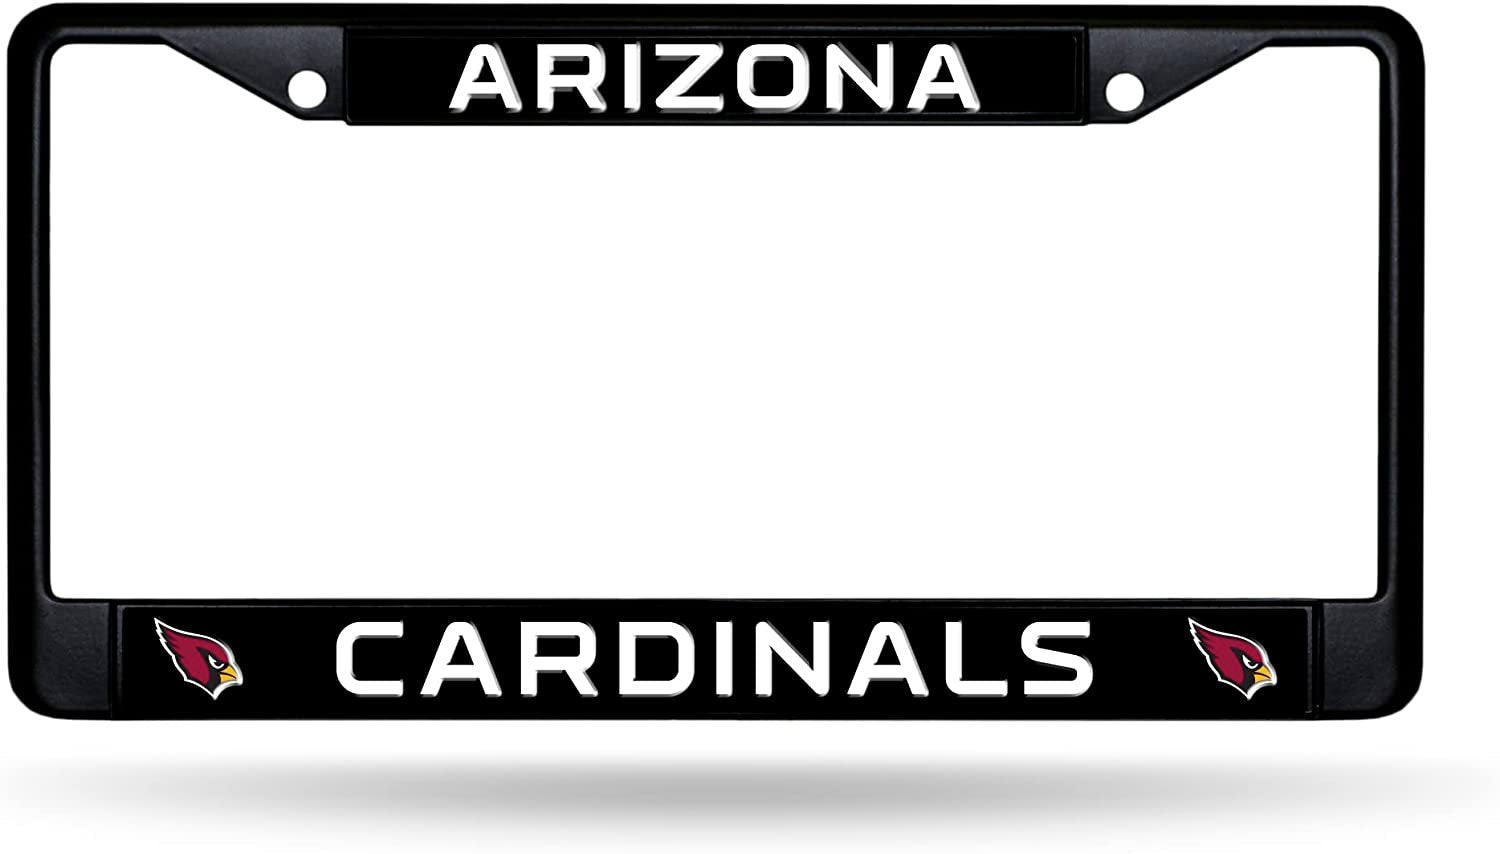 Arizona Cardinals Black Metal License Plate Frame Chrome Tag Cover 6x12 Inch